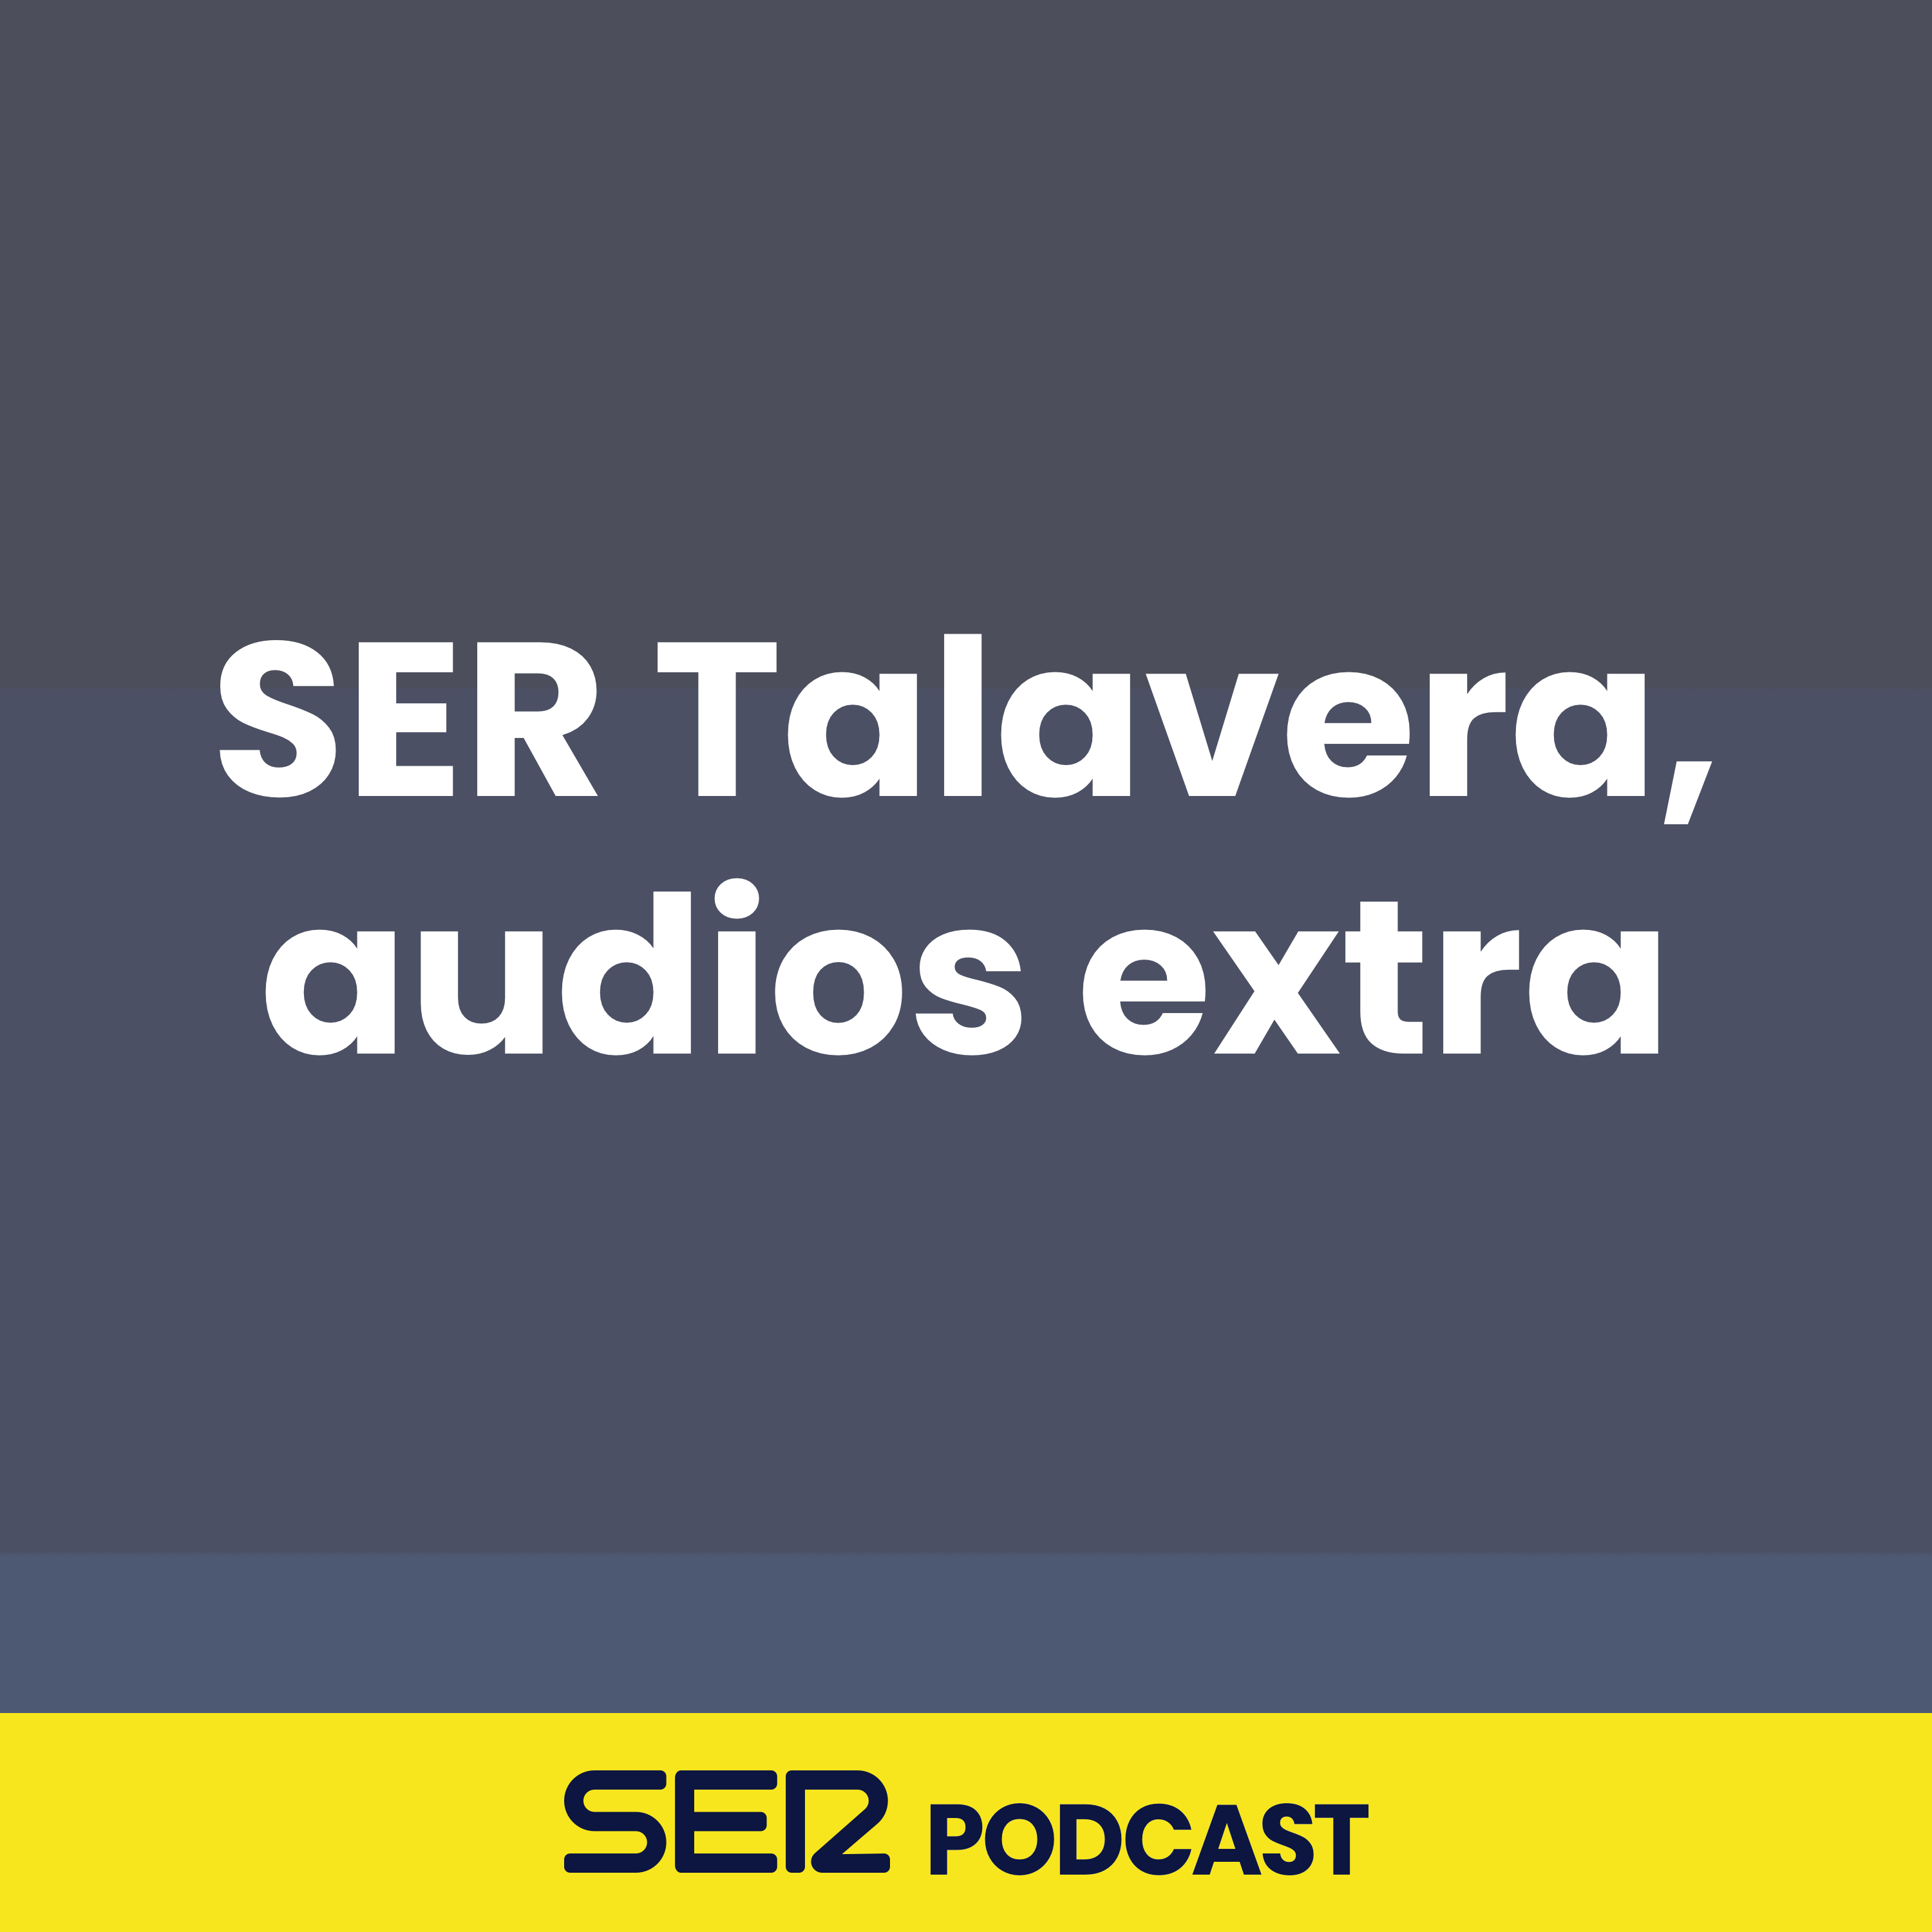 SER Talavera, audios extra